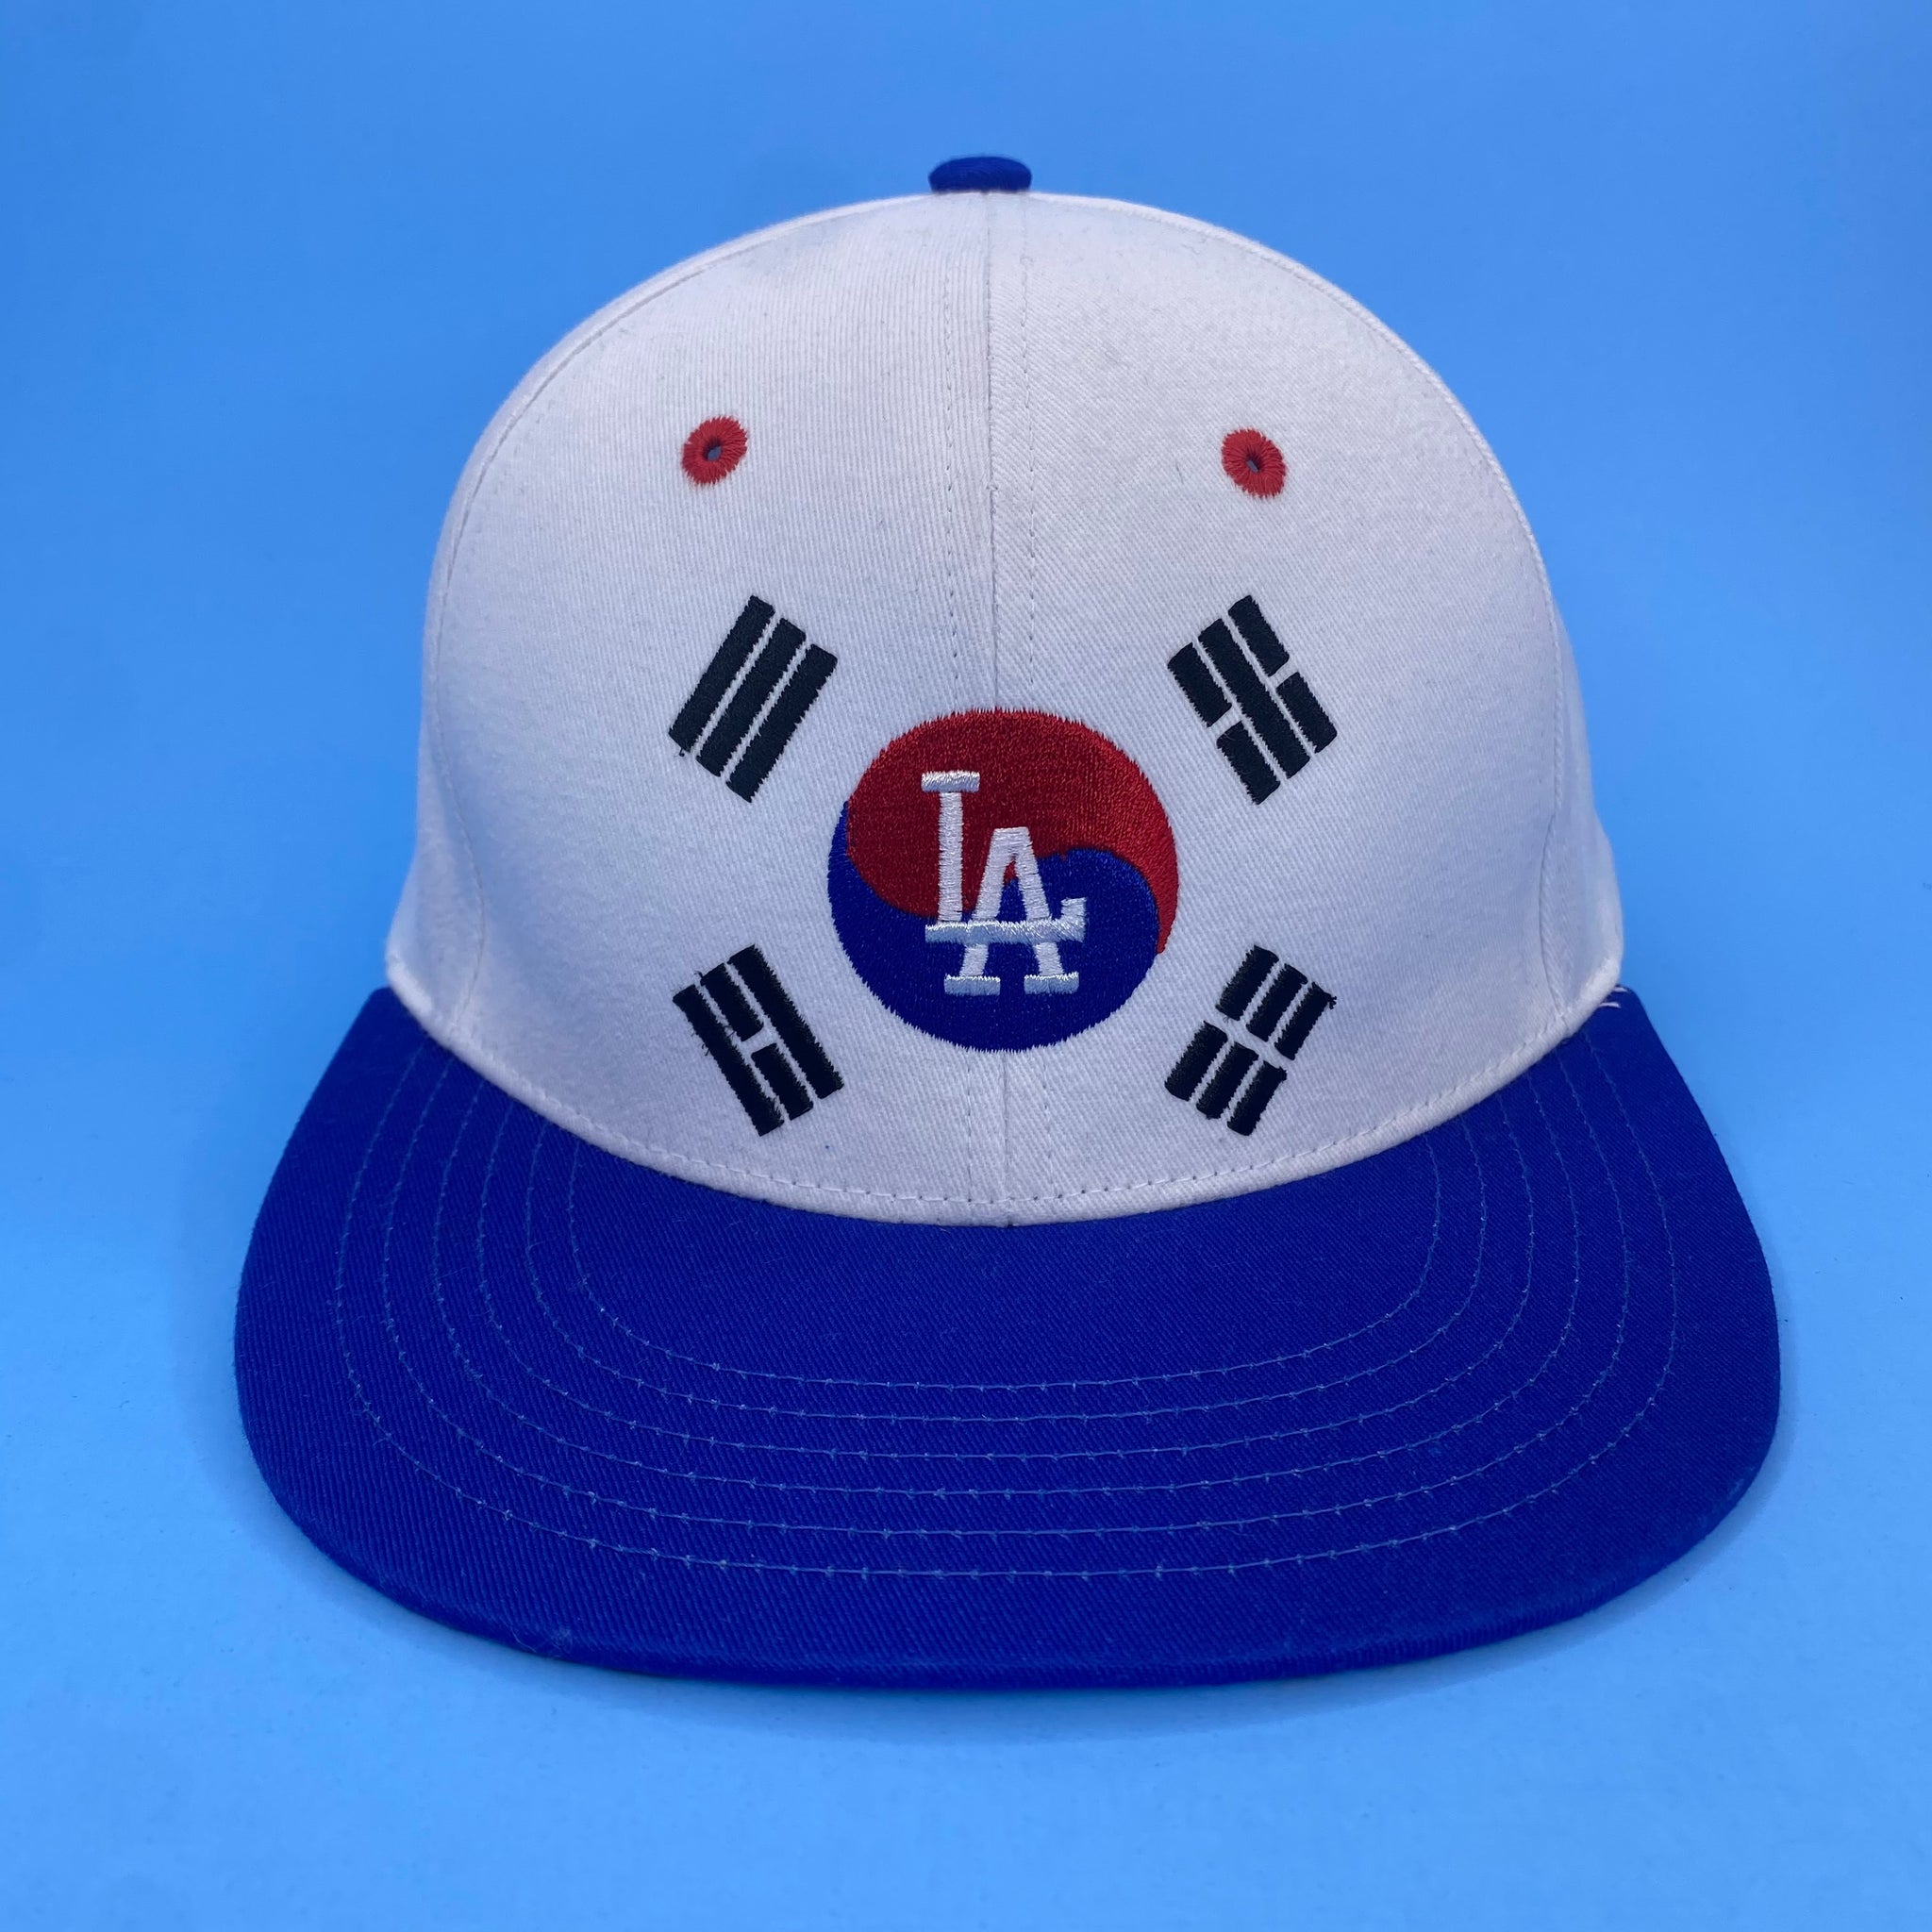 Los Angeles Dodgers – Korea Night Hat Giveaway